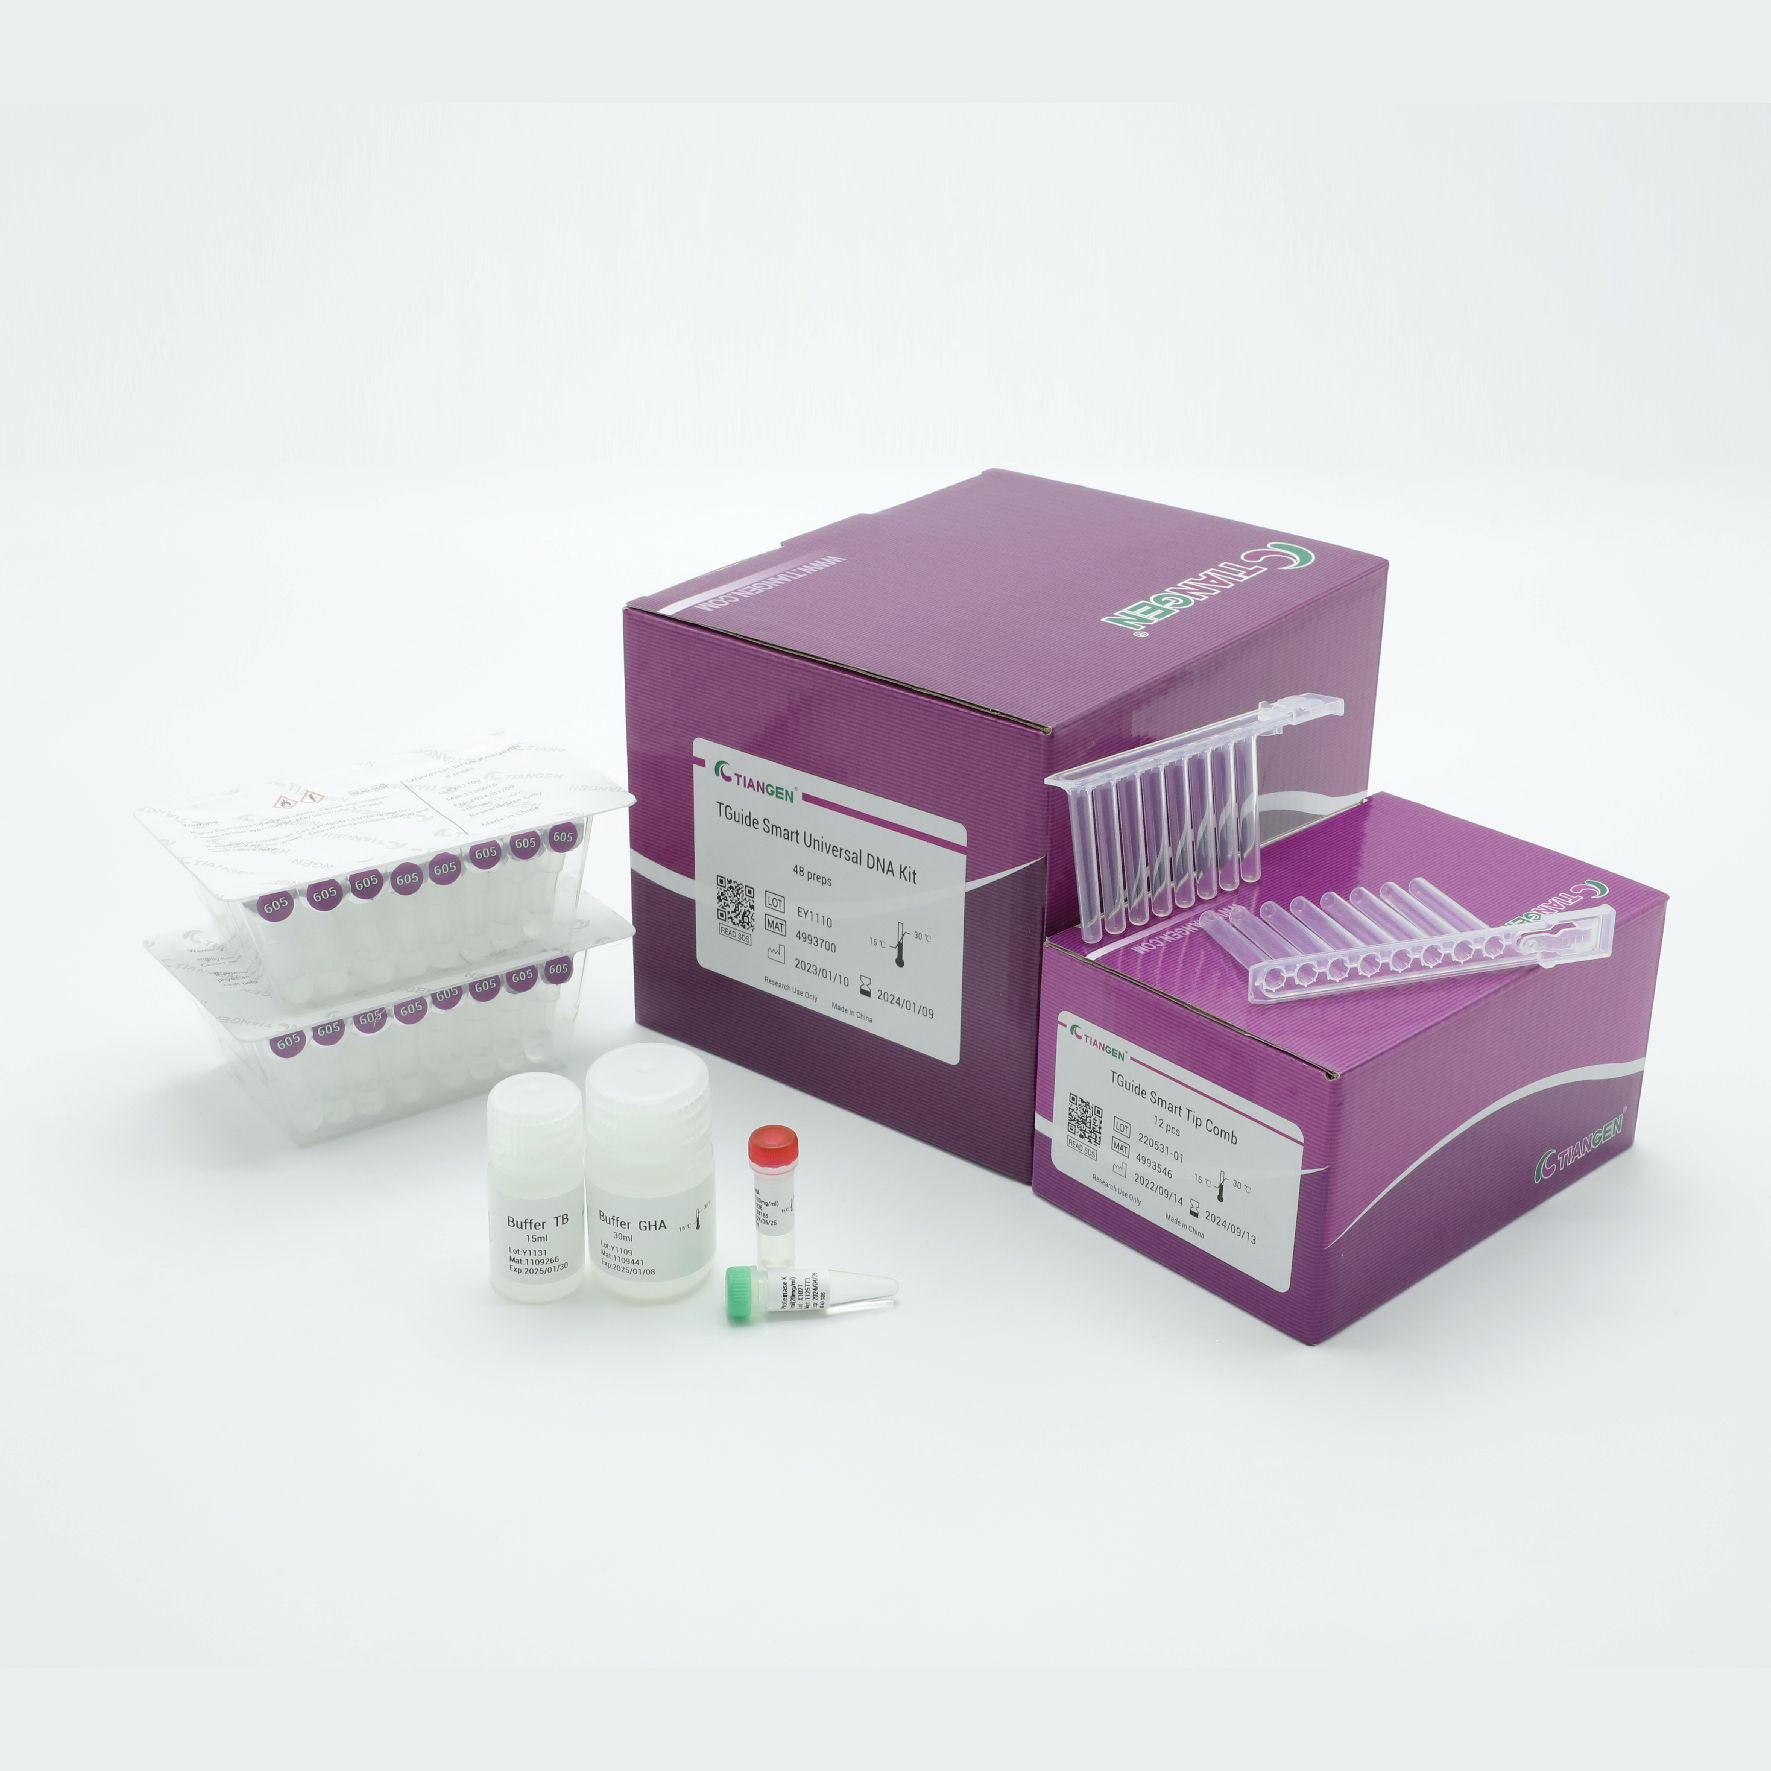 TGuide Smart Universal DNA Kit